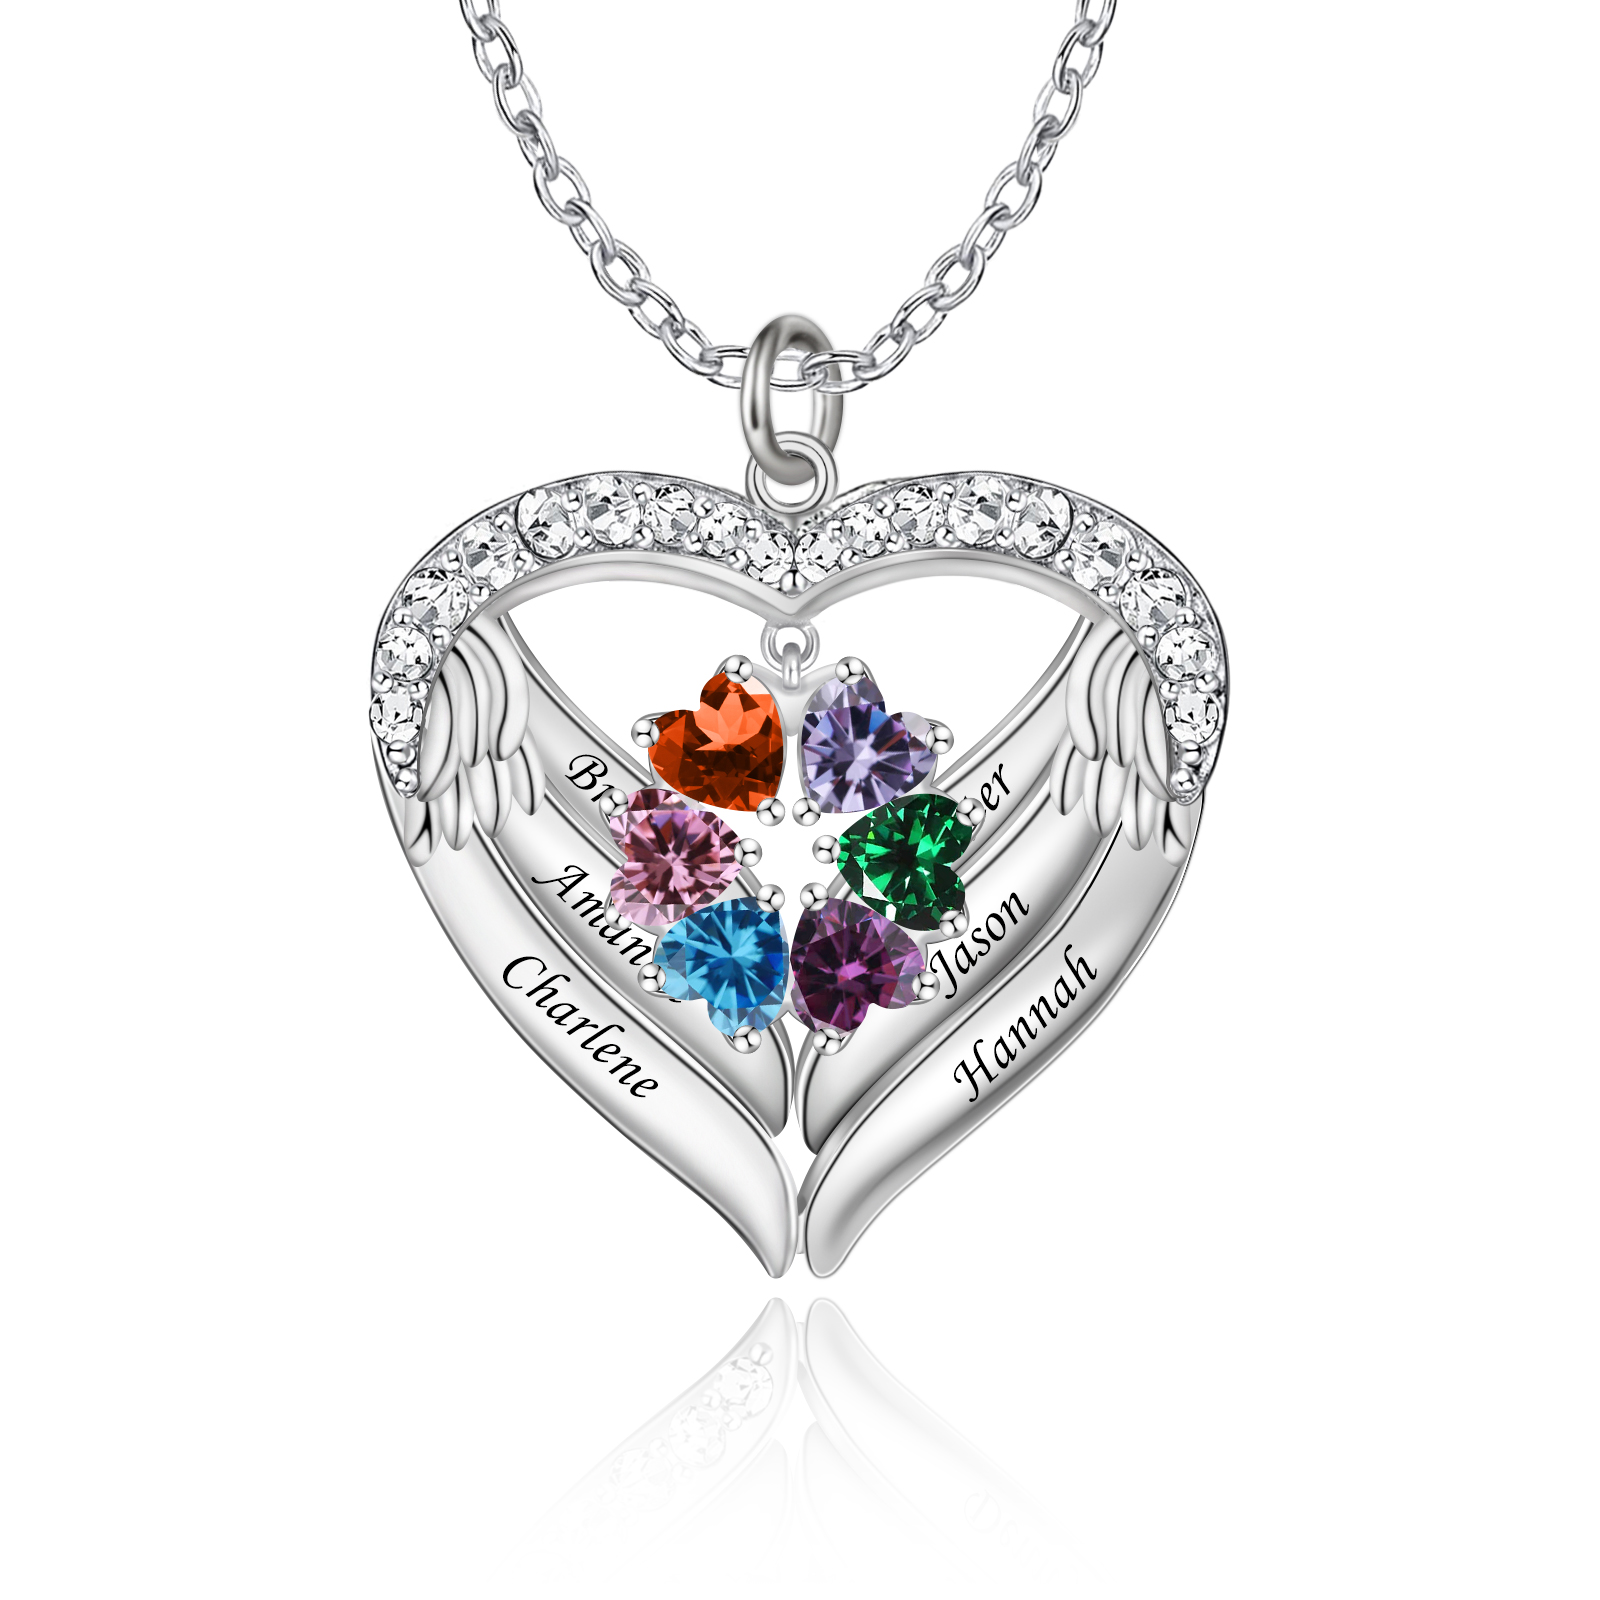 NL10-1 Custom Birthstones Heart Pendant Necklace for Mom